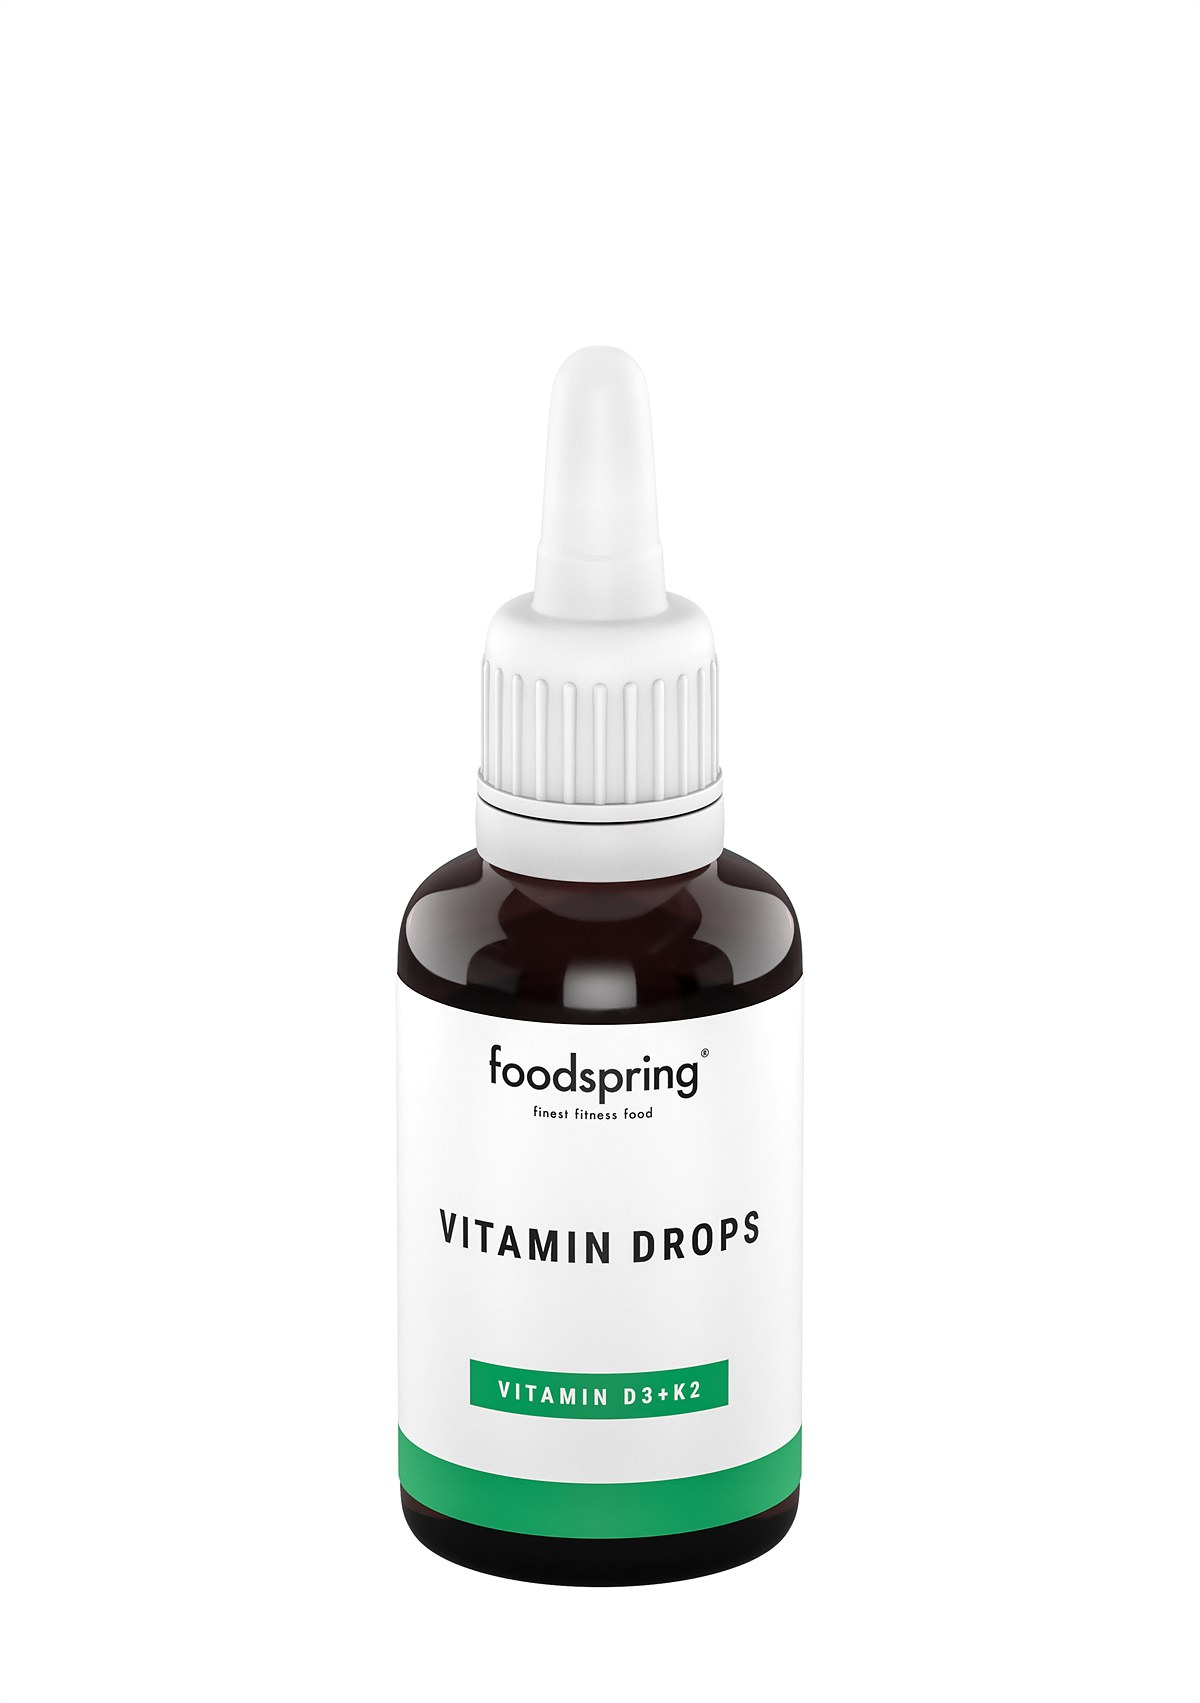 foodspring Vitamin Drops_EUR 24,99_2